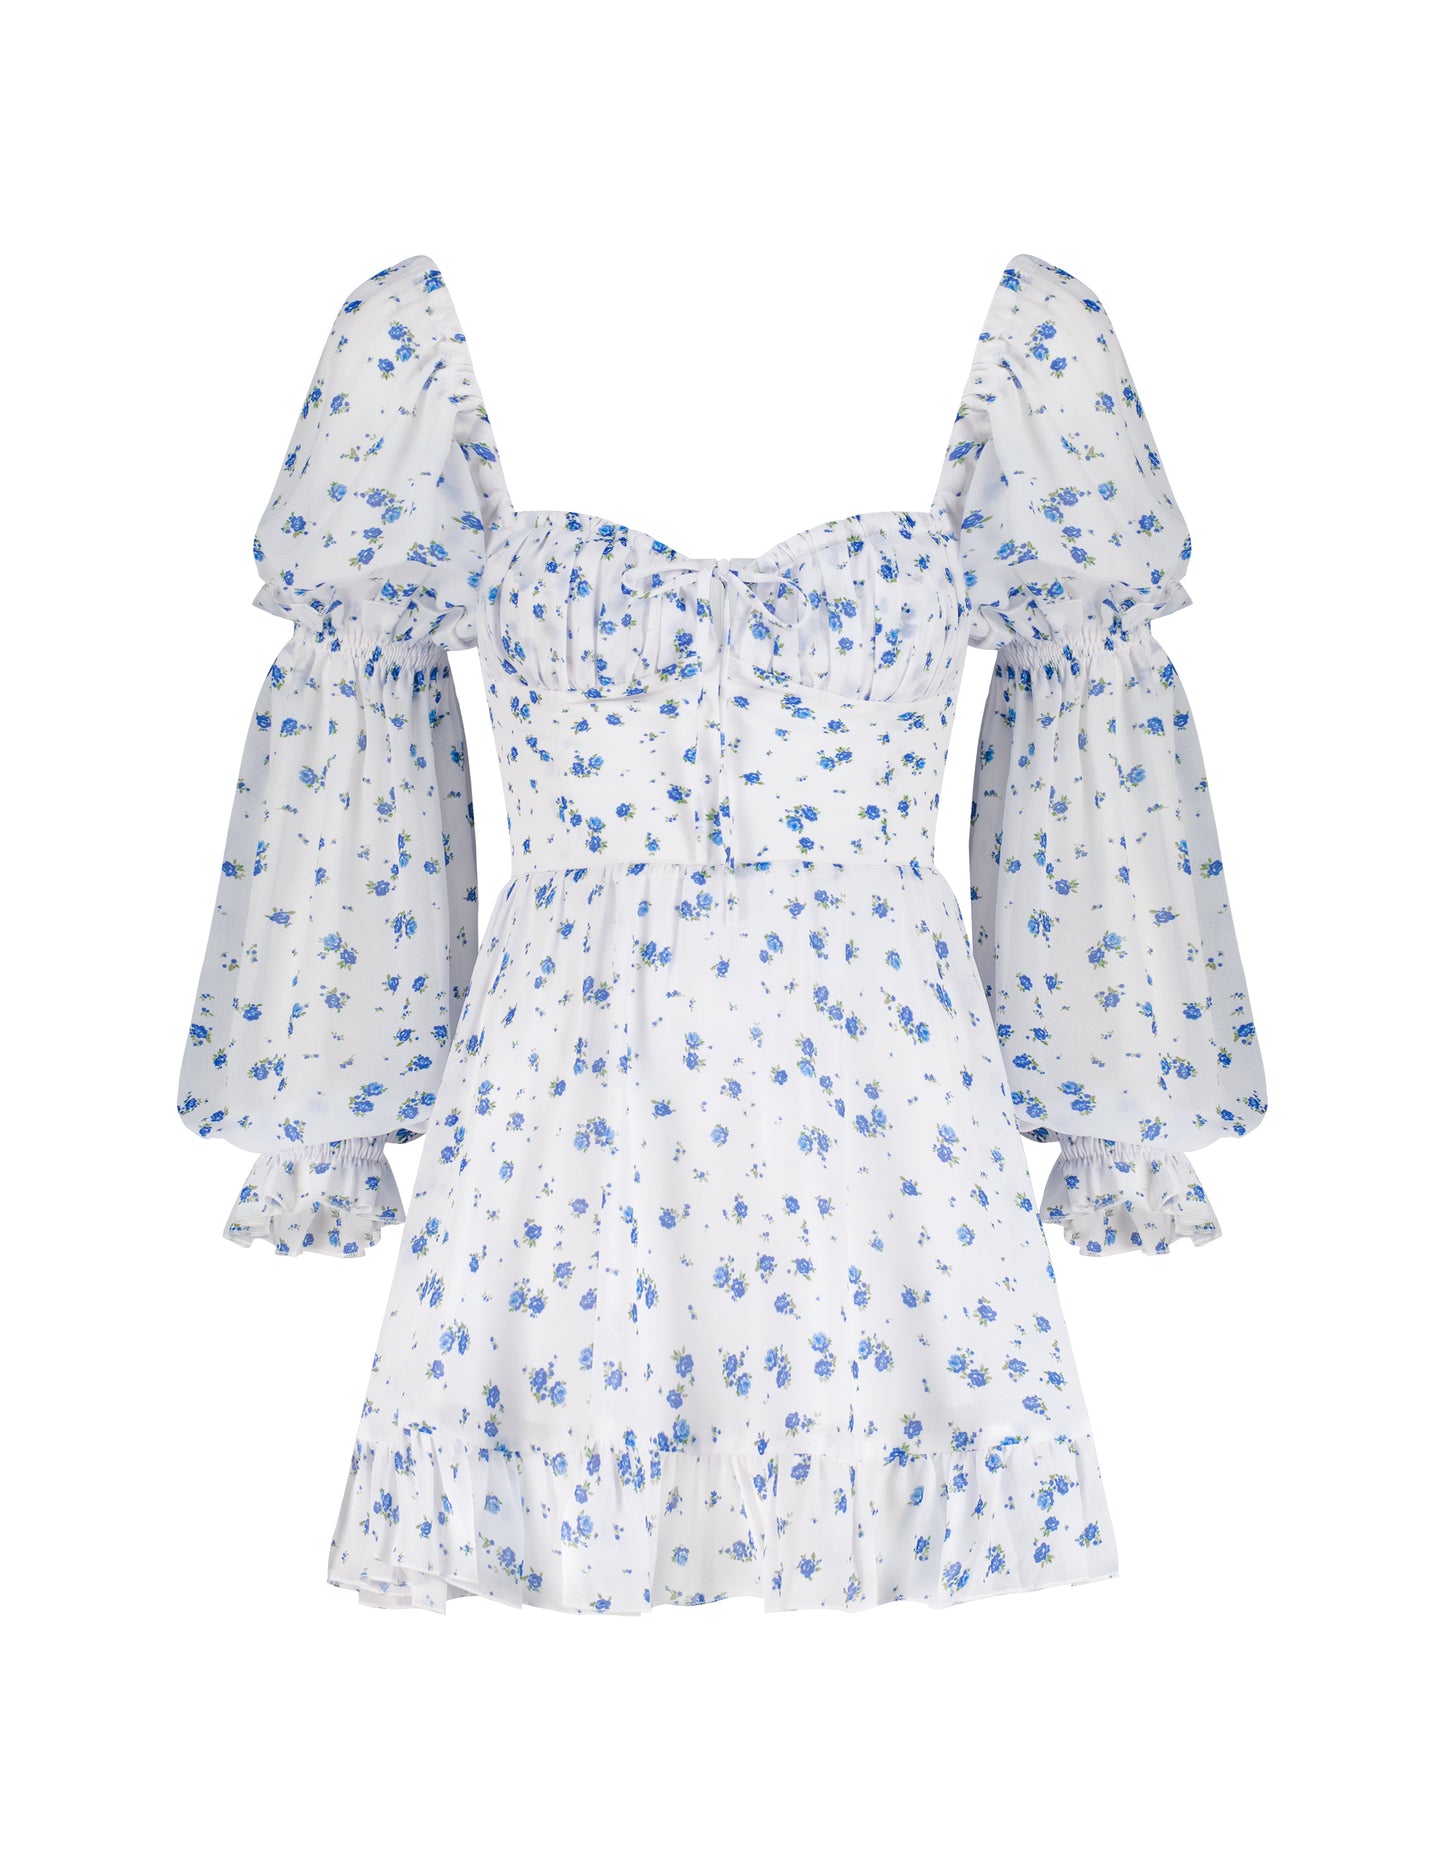 Aurora Dainty Blue Milkmaid Dress